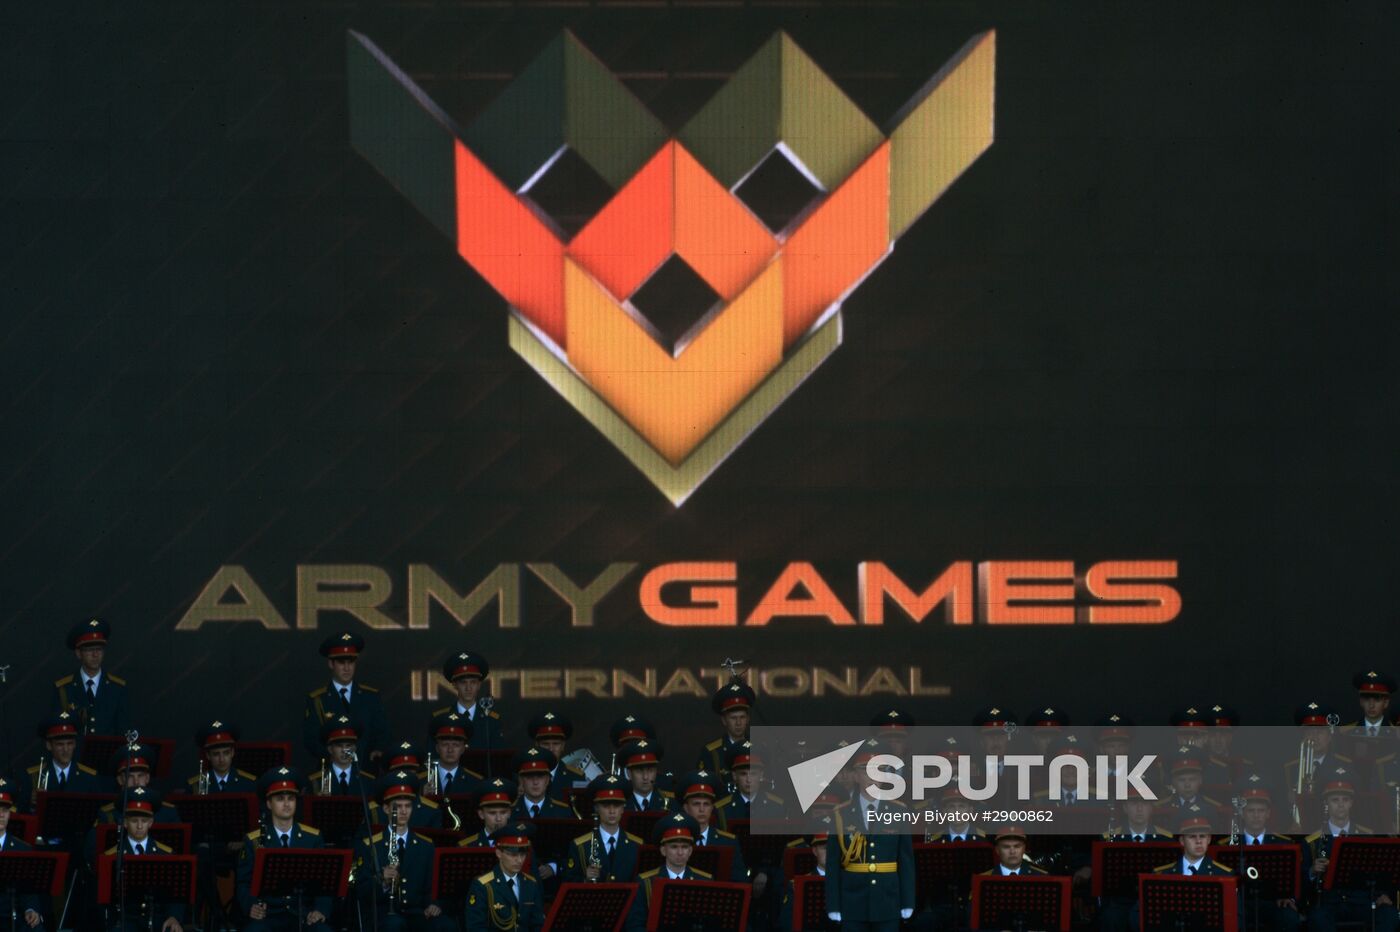 International Army Games 2016 kick off